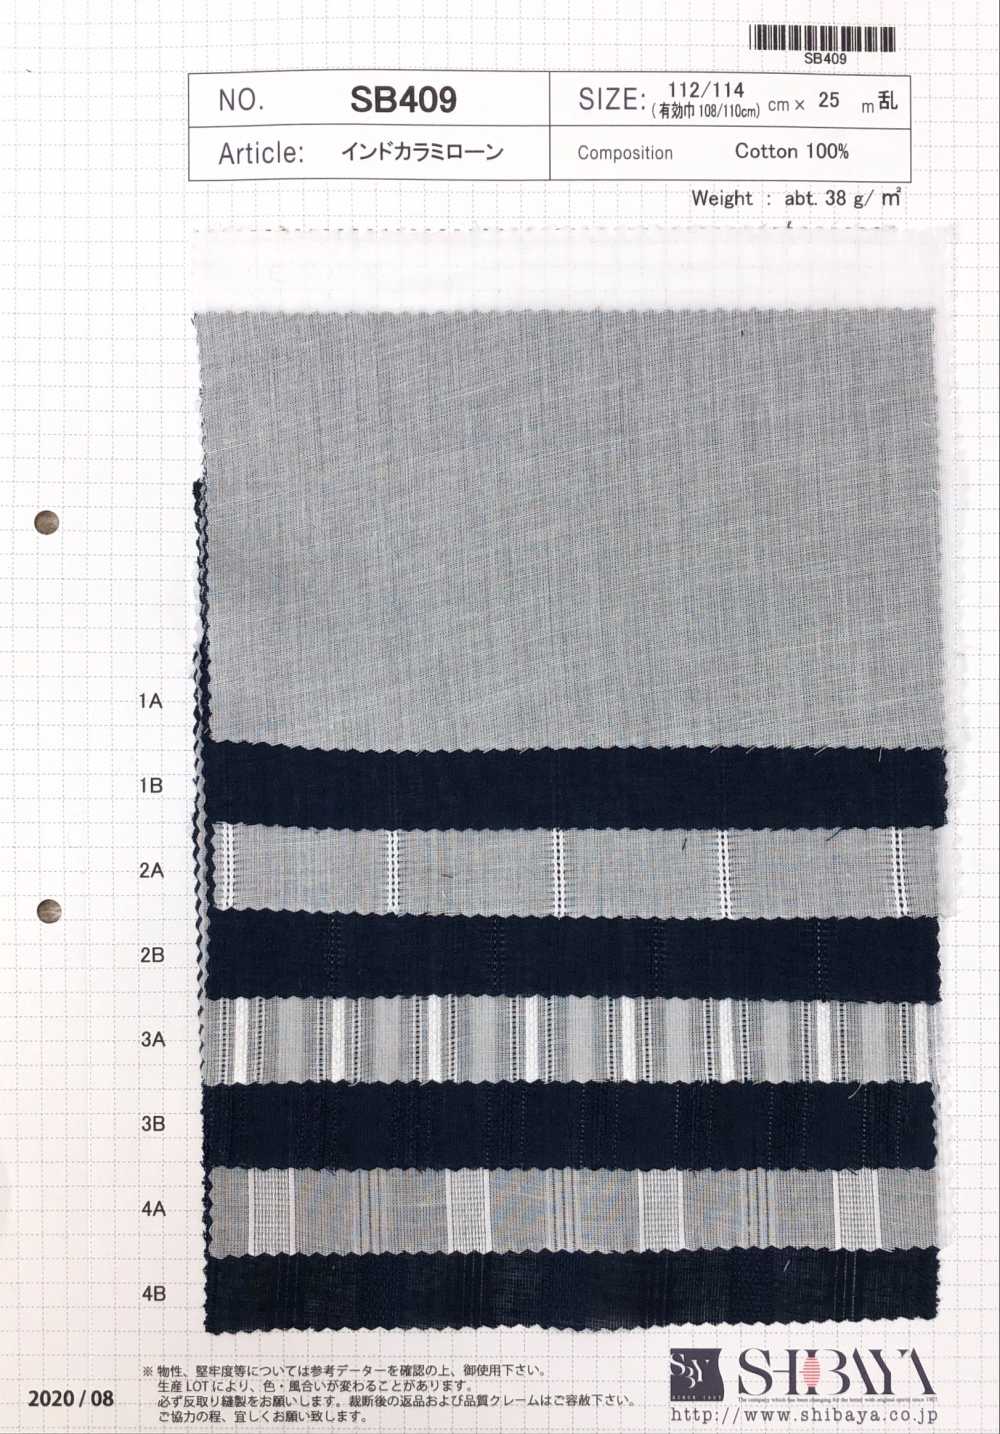 SB409 [OUTLET] Pelouse Indienne Leno Weave[Fabrication De Textile] SHIBAYA